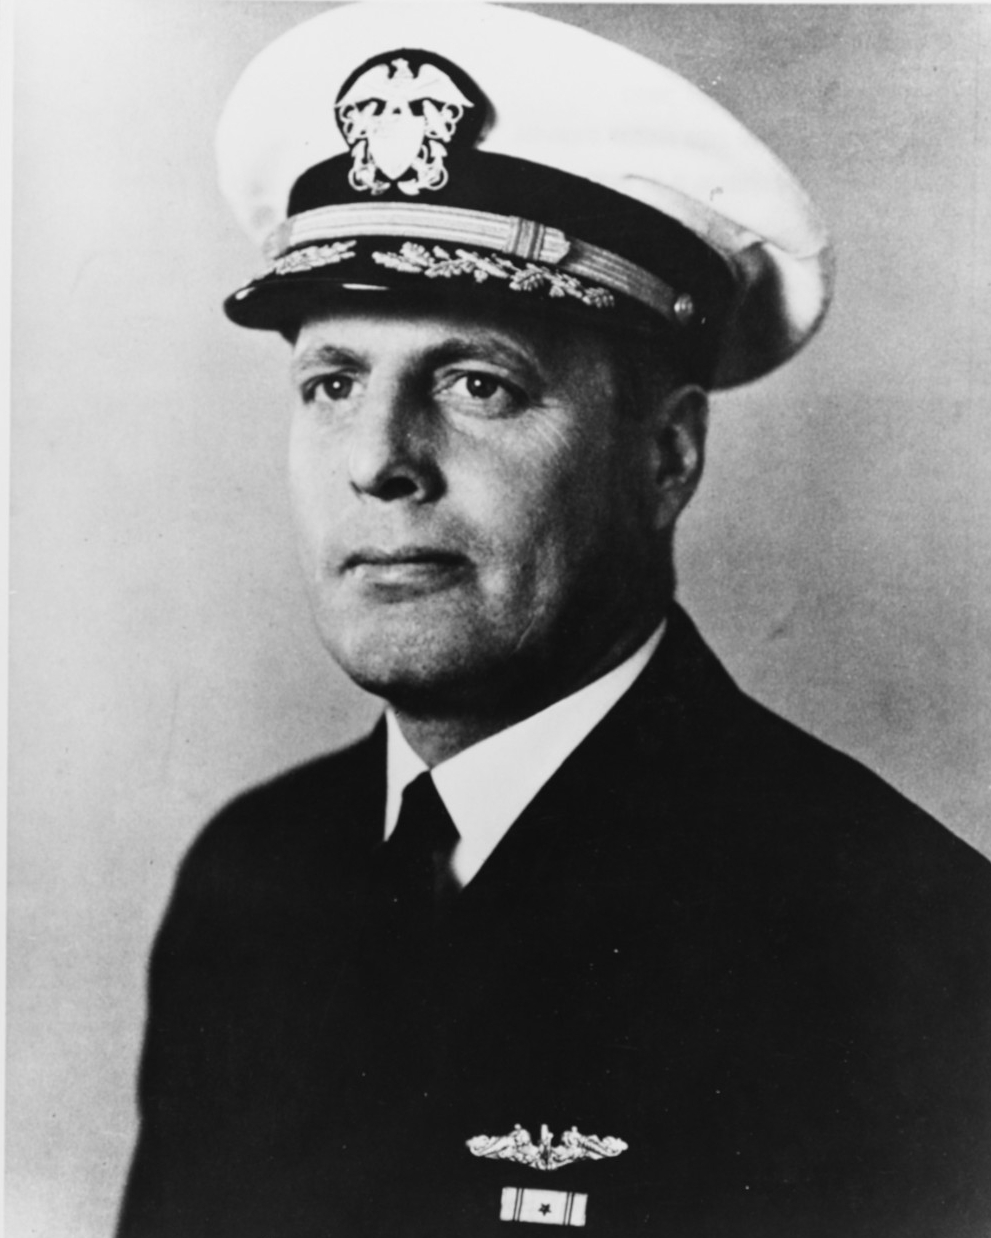 Captain John P. Cromwell